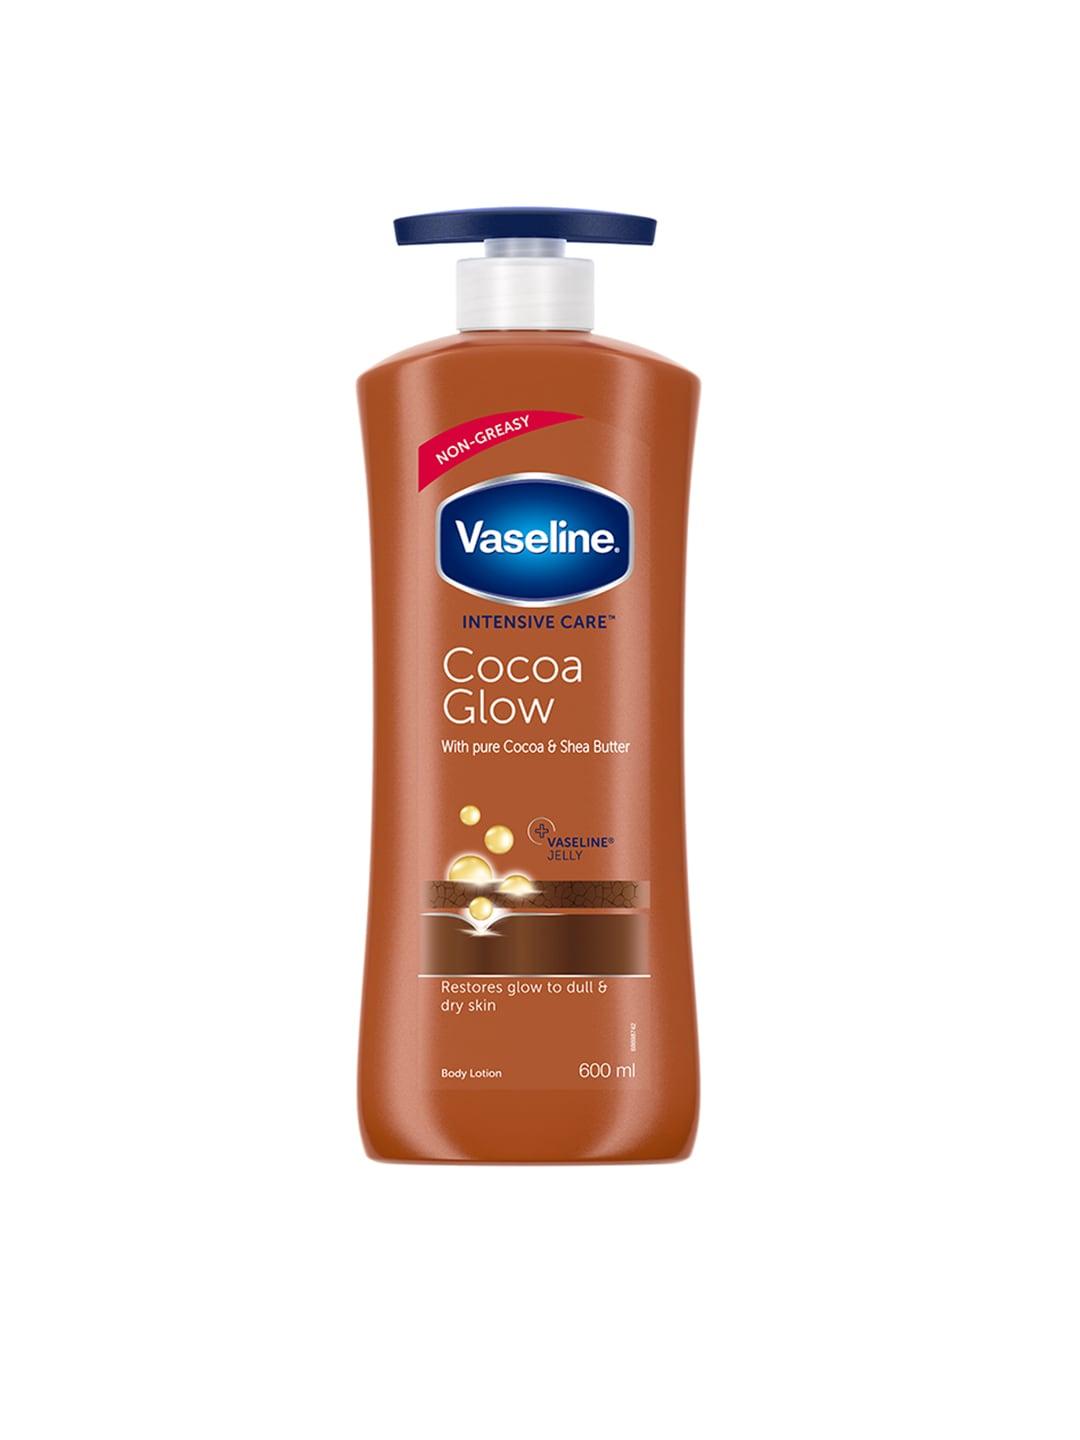 Vaseline Cocoa Glow Body Lotion 600 ml